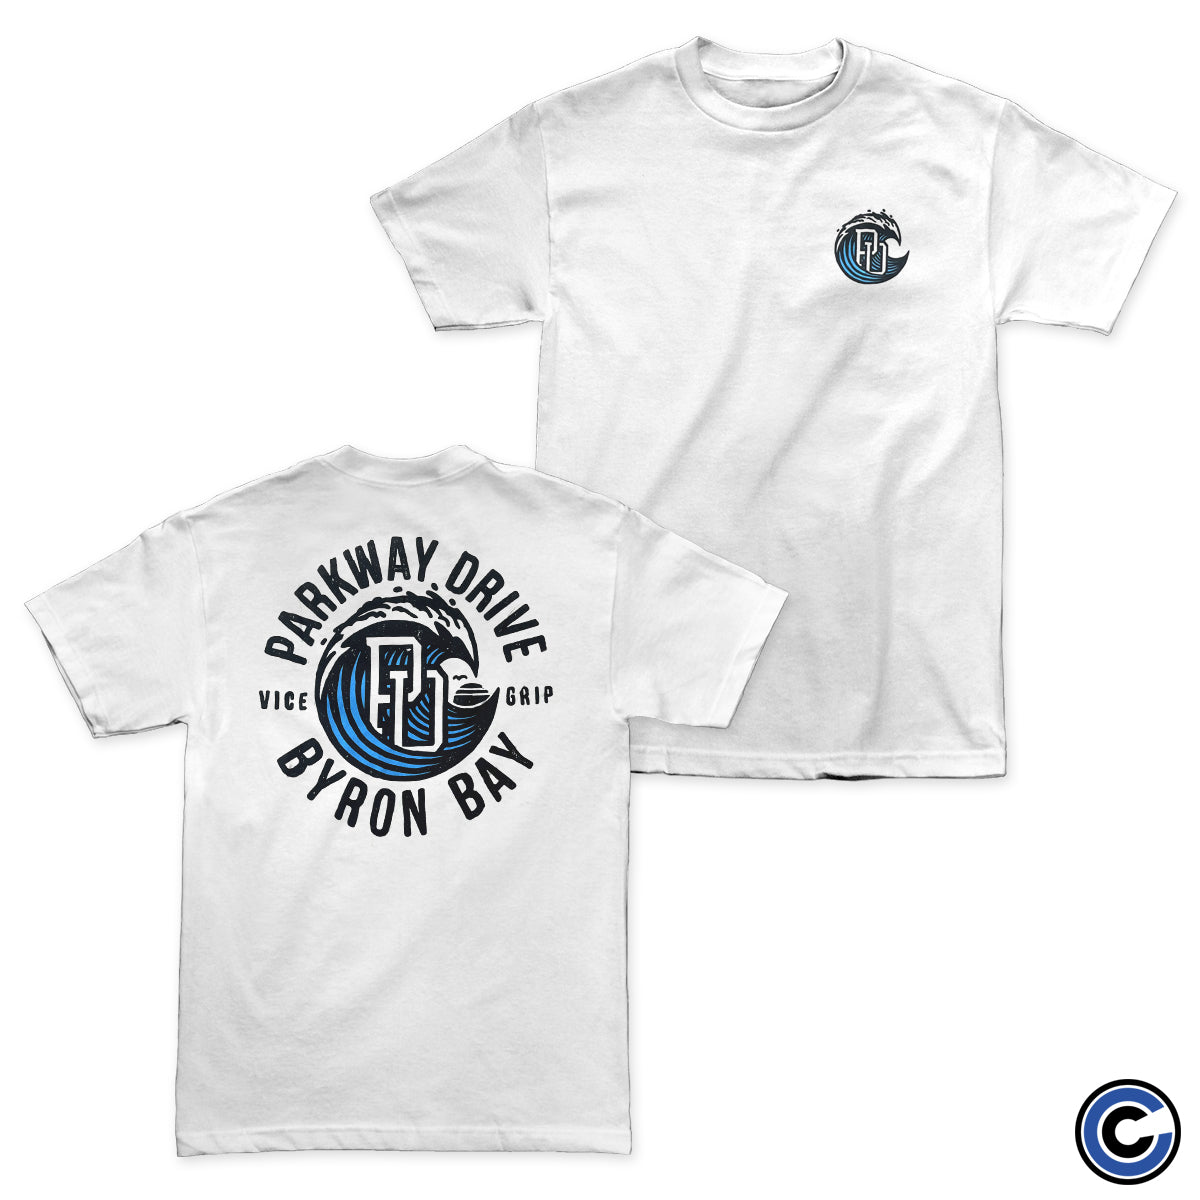 Parkway Drive "Vice" Shirt